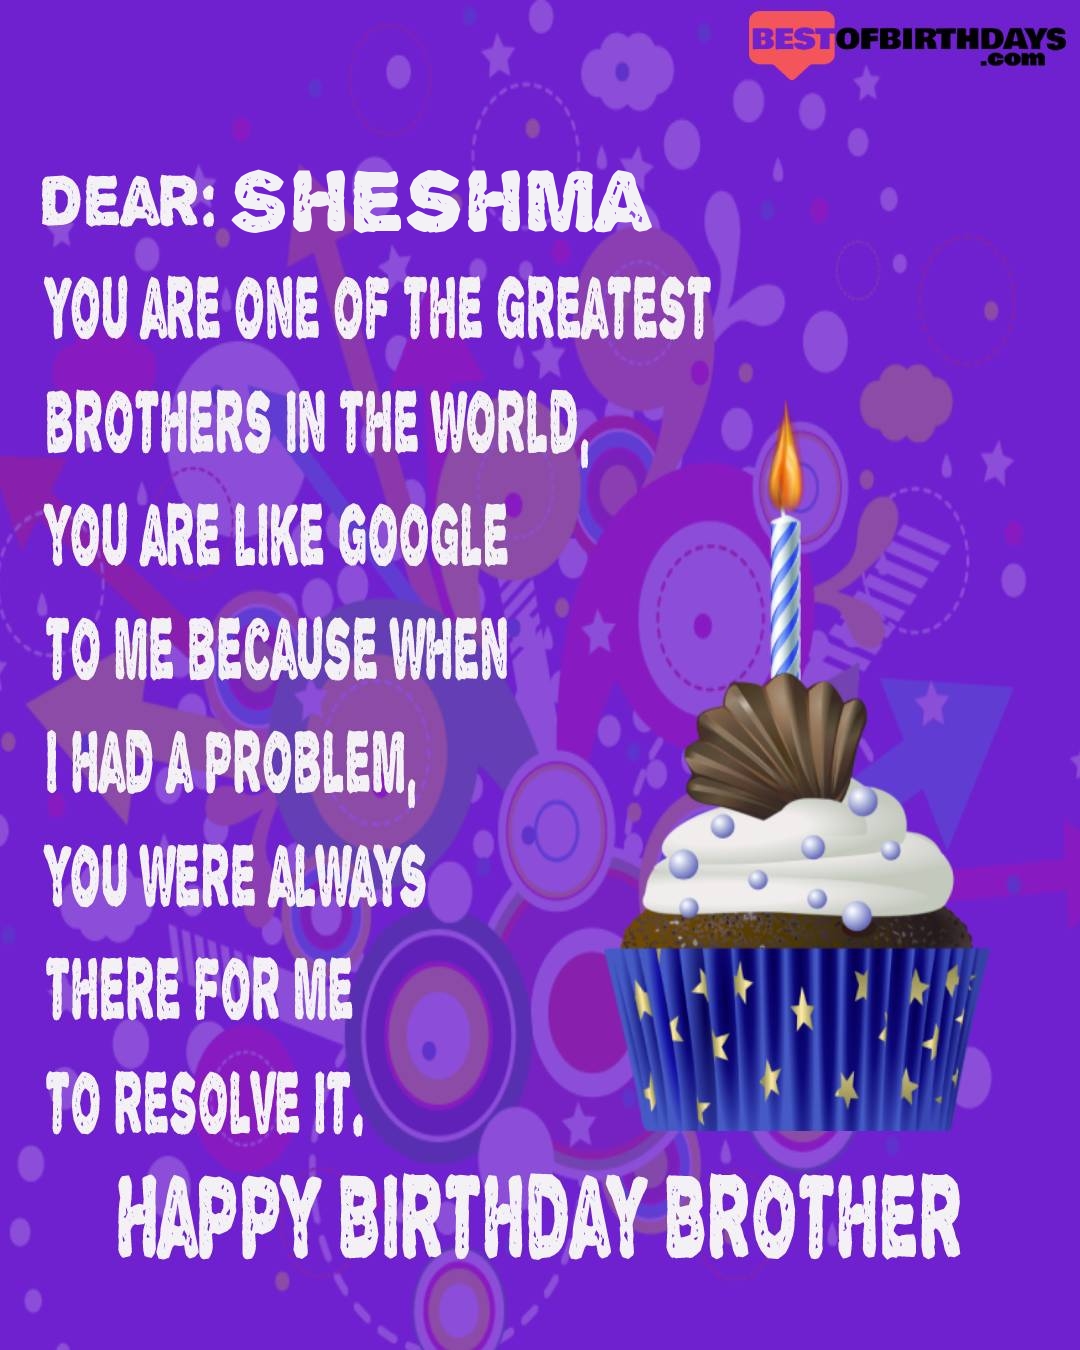 Happy birthday sheshma bhai brother bro